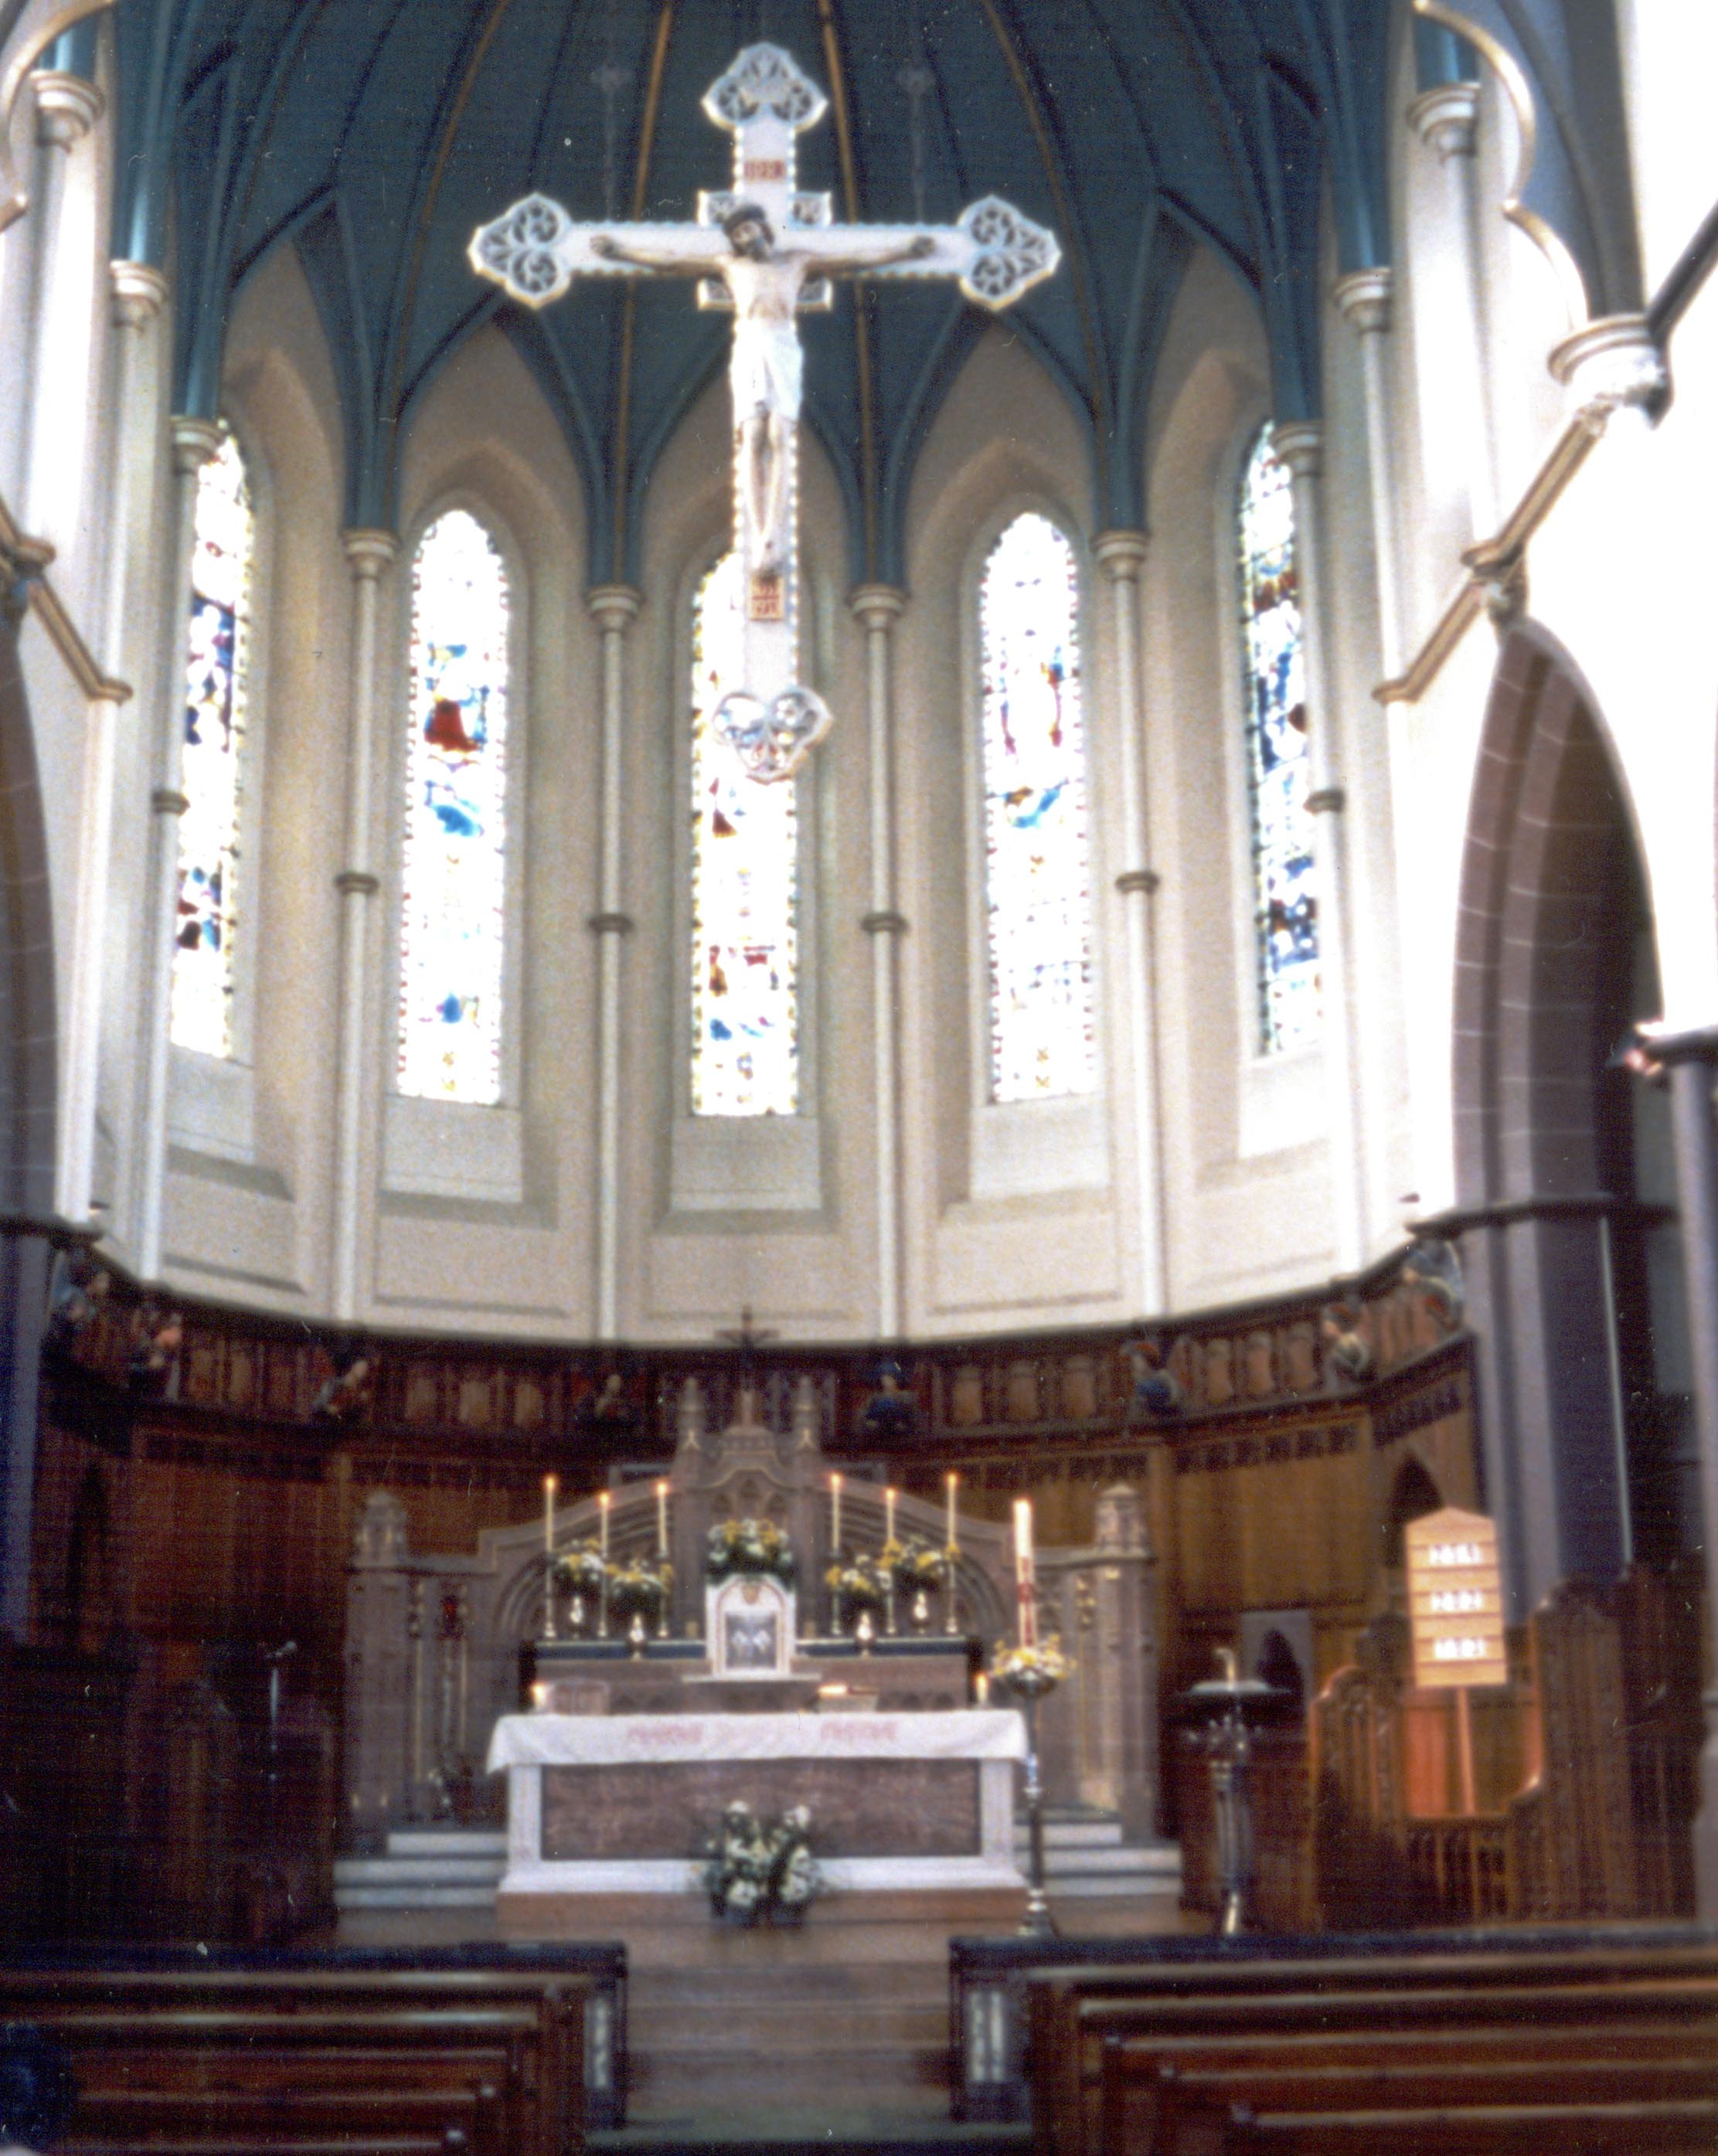 High Altar and Cross